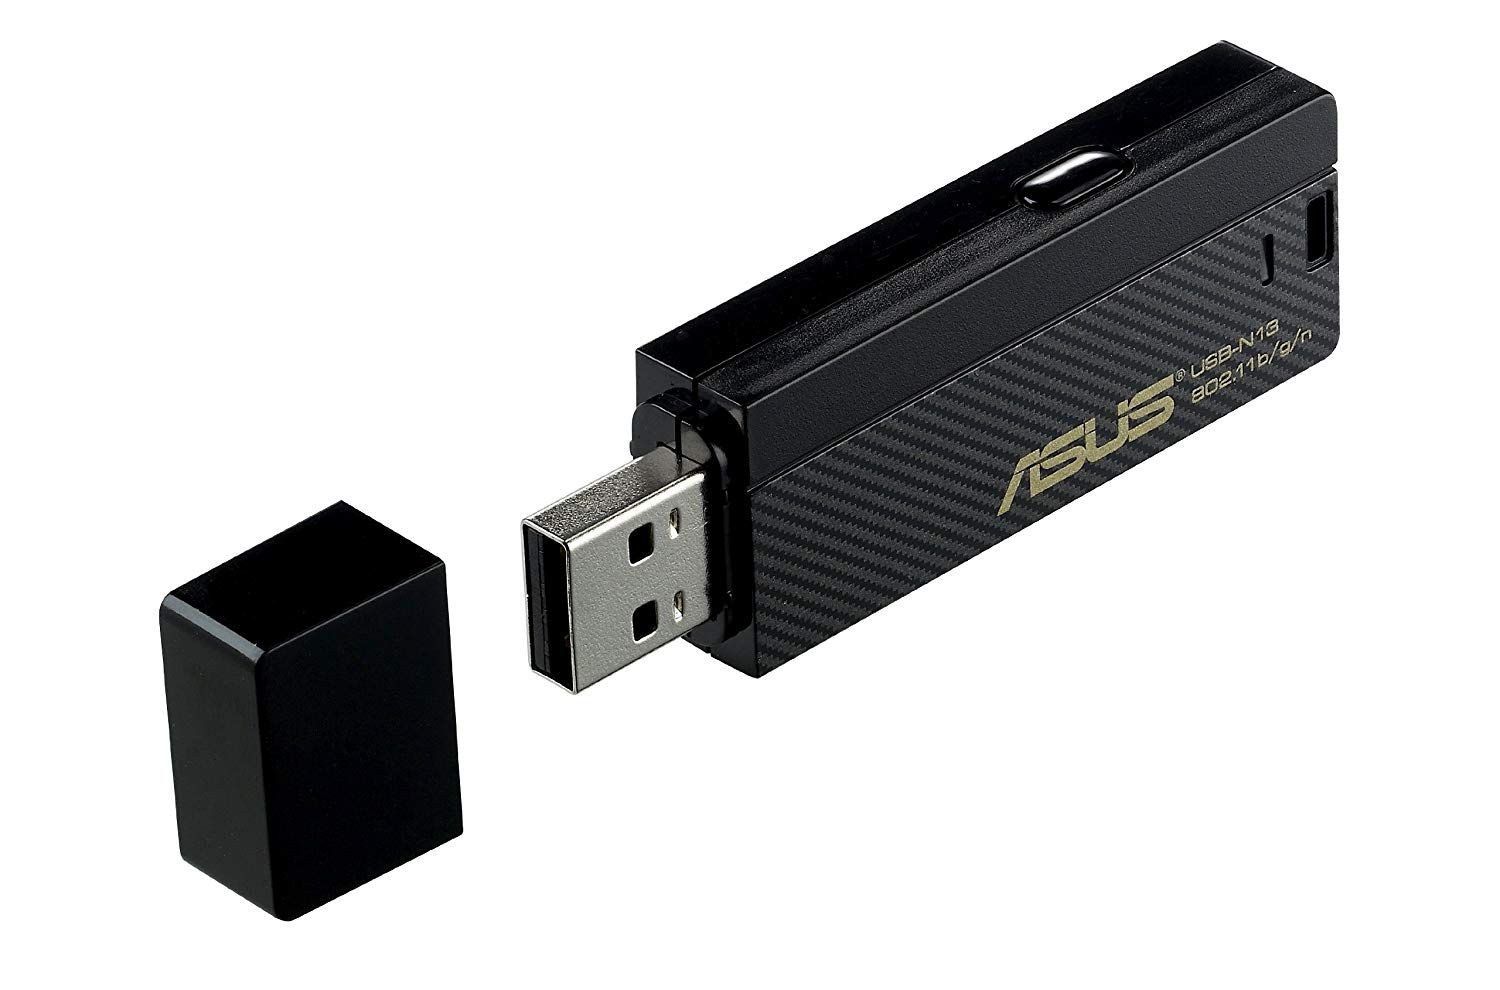 Asus Dual-Band AC1900 USB Wi-Fi Adapter, USB-AC68, IEEE 802.11 a/b/g/n/ac, 2* Internal antenn/ External antenna, 2.4 GHz/5 GHz_1